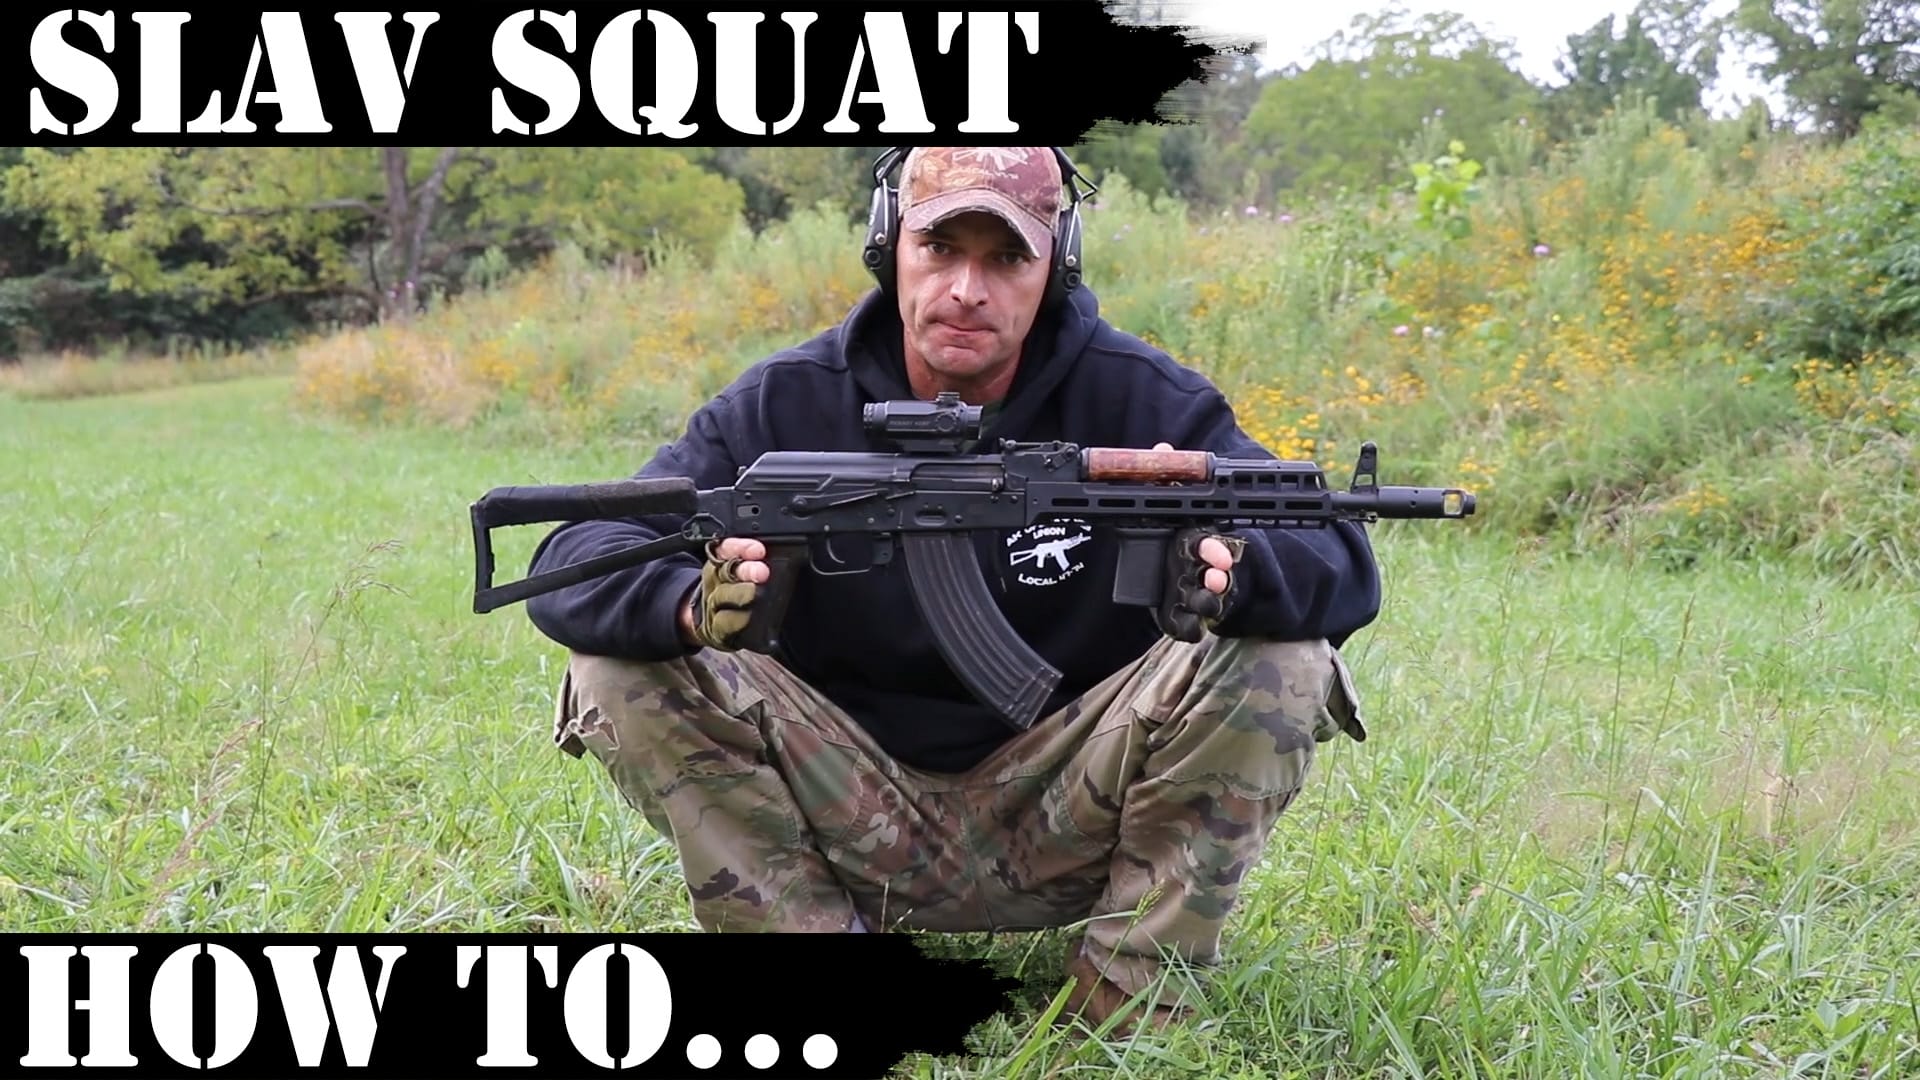 Slav Squat – how to shoot from squat!